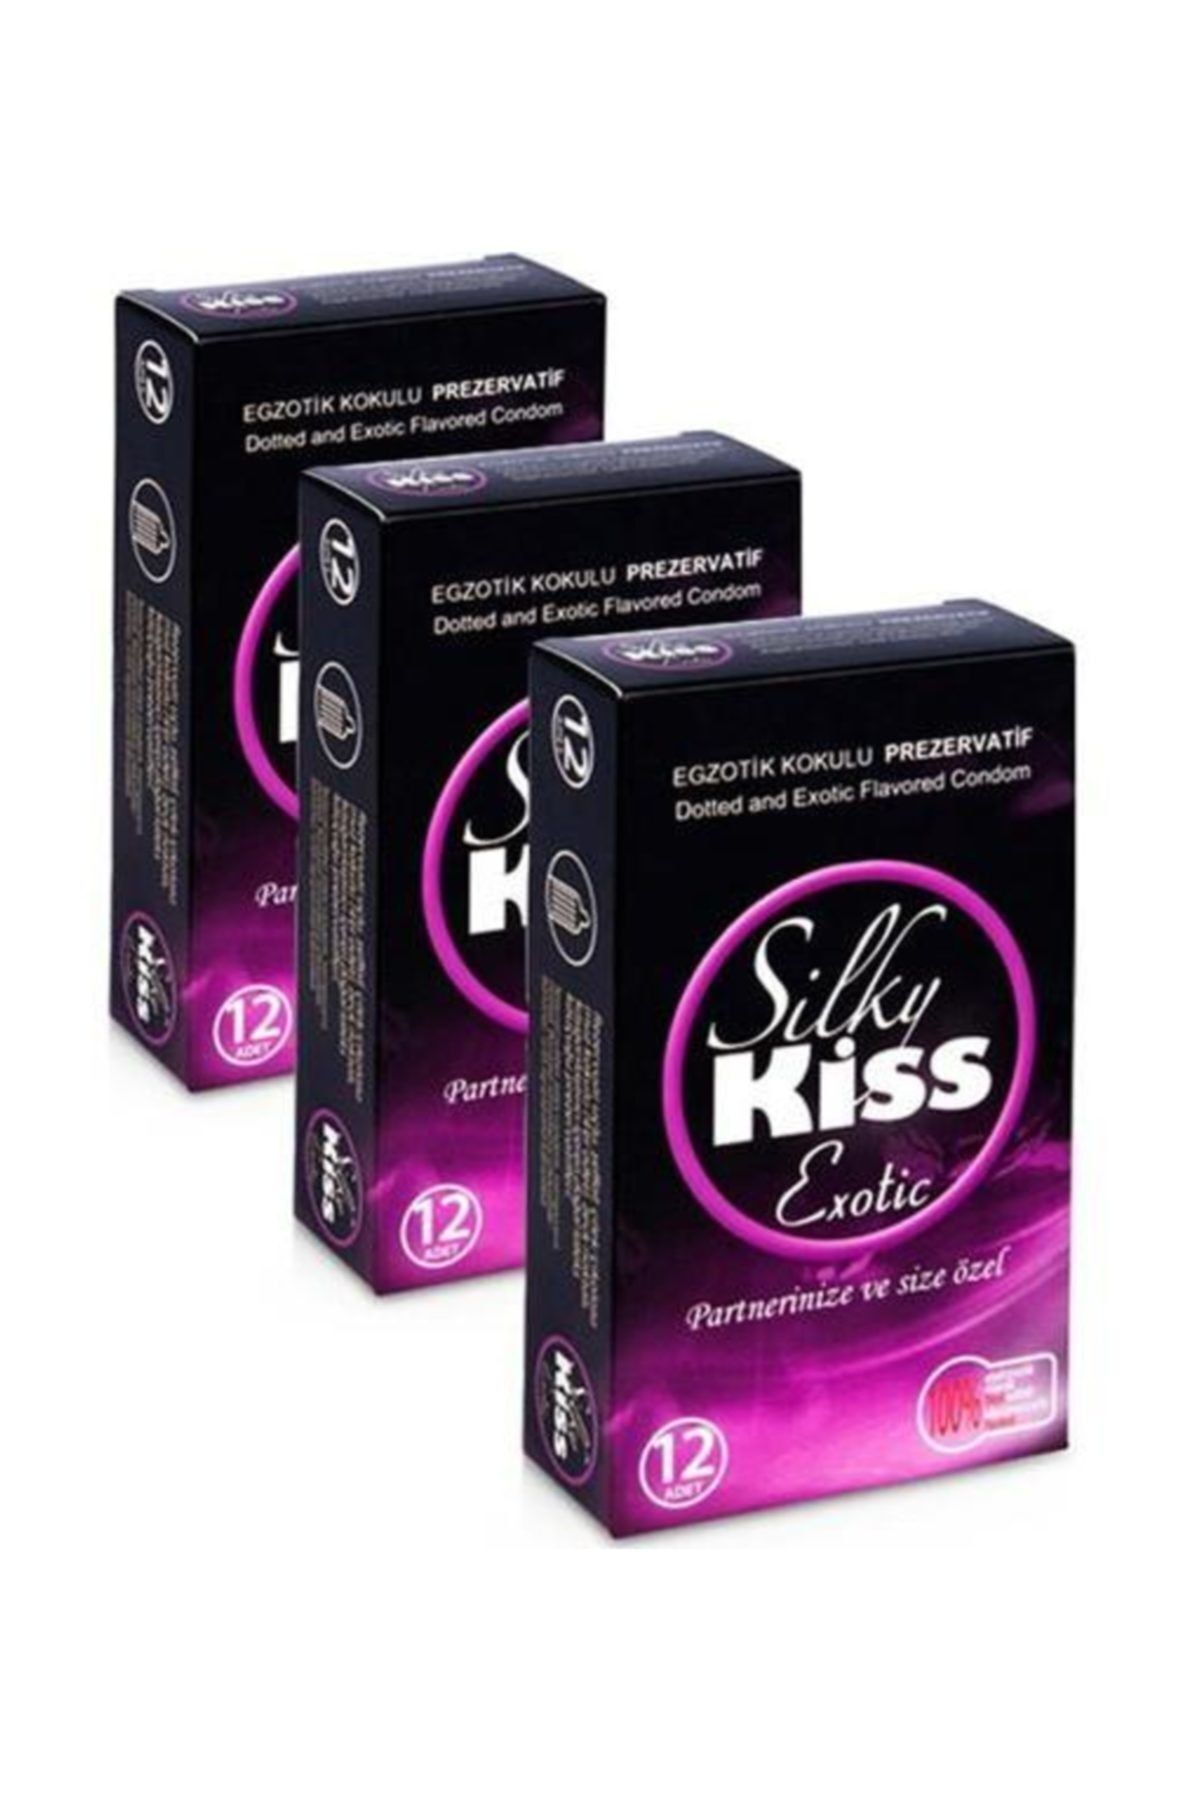 Silky Kiss Prezervatif Exotic Kokulu 36'lı Kondom